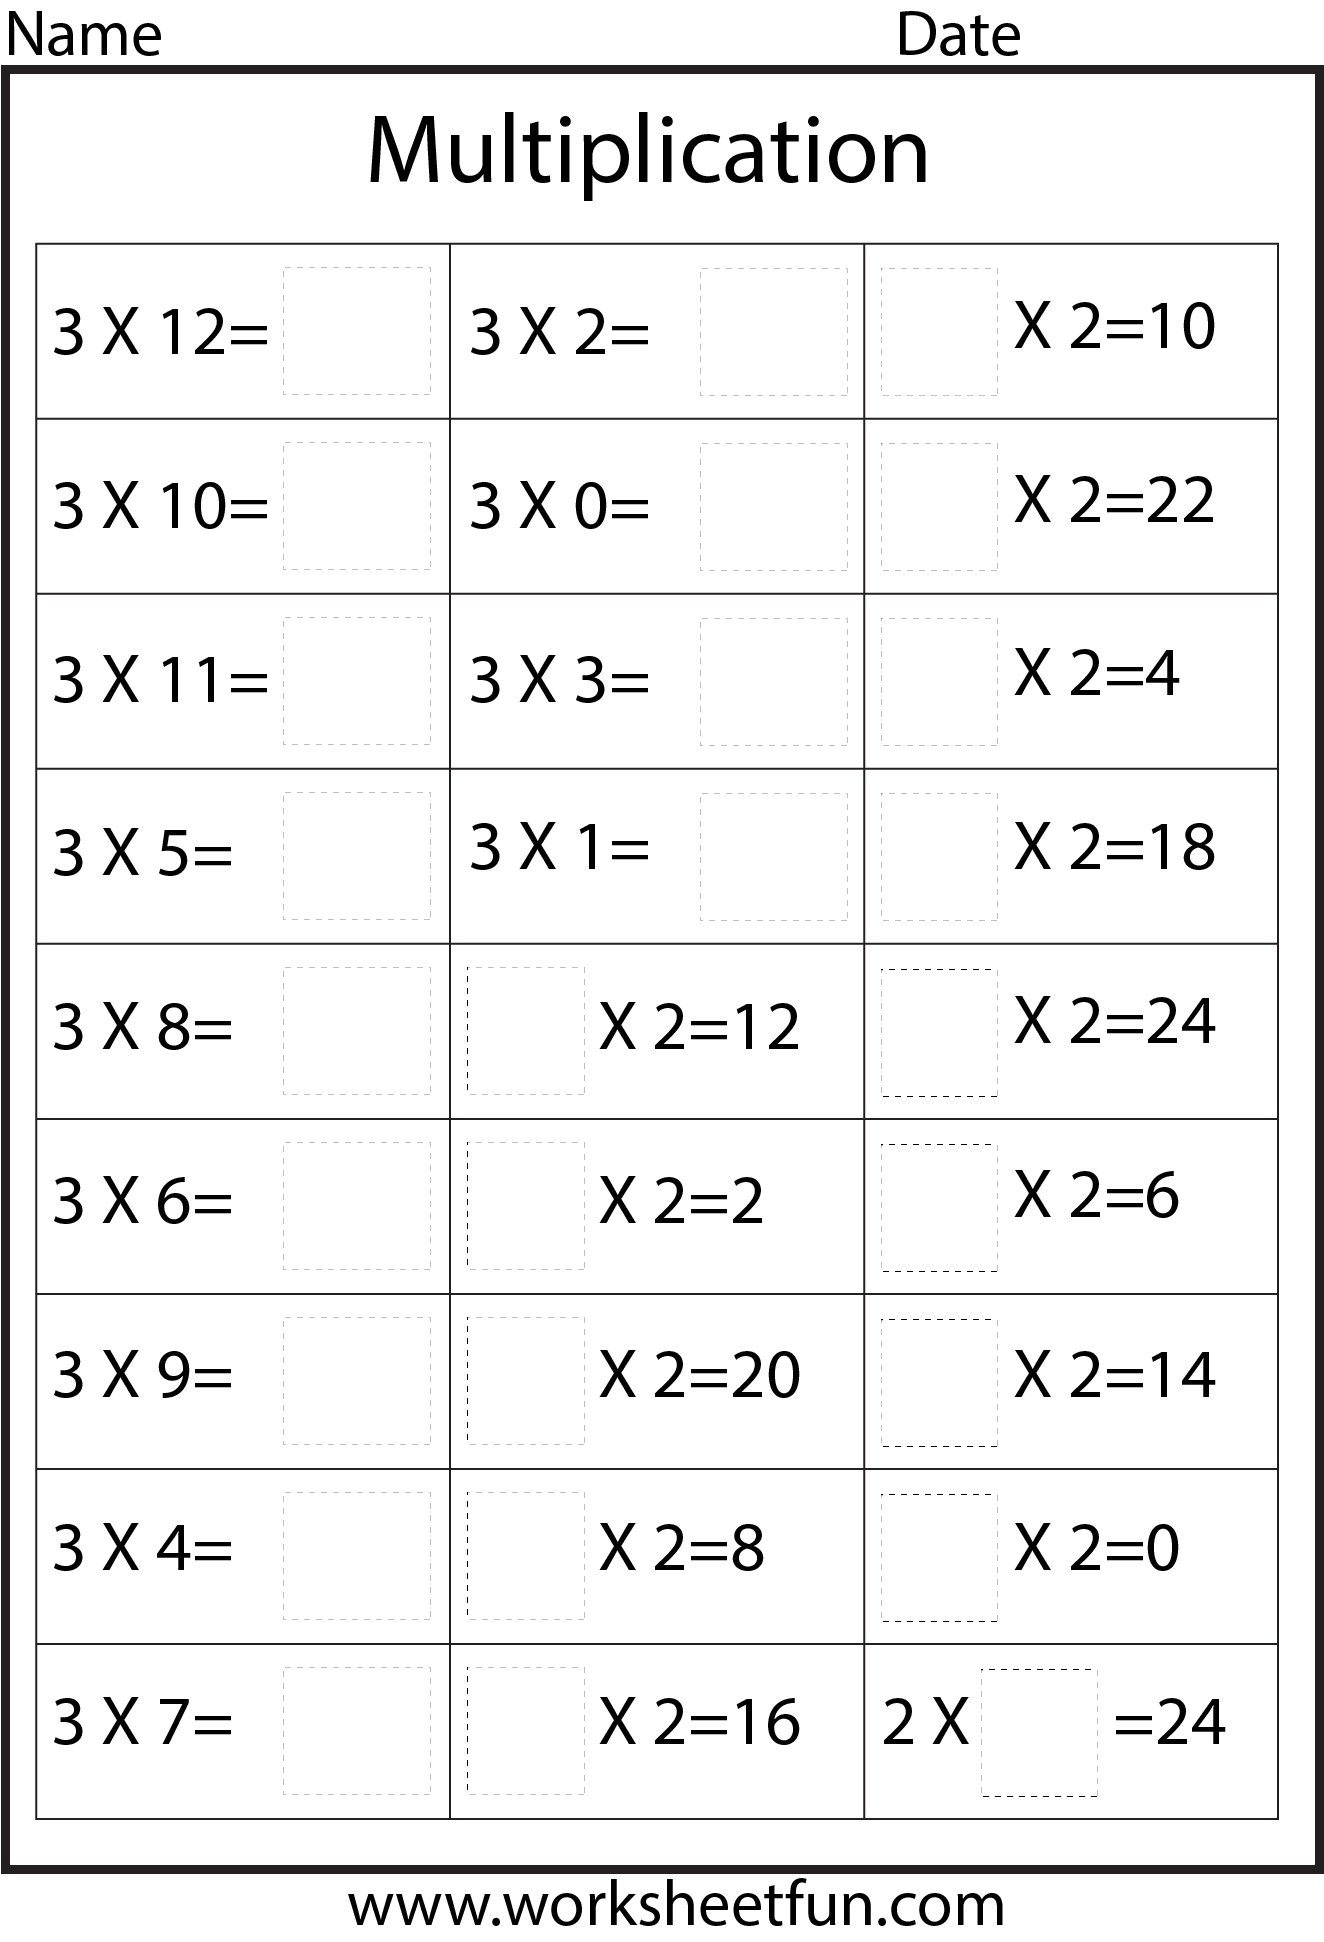 Multiplication Facts - Nine Worksheets / FREE Printable ...